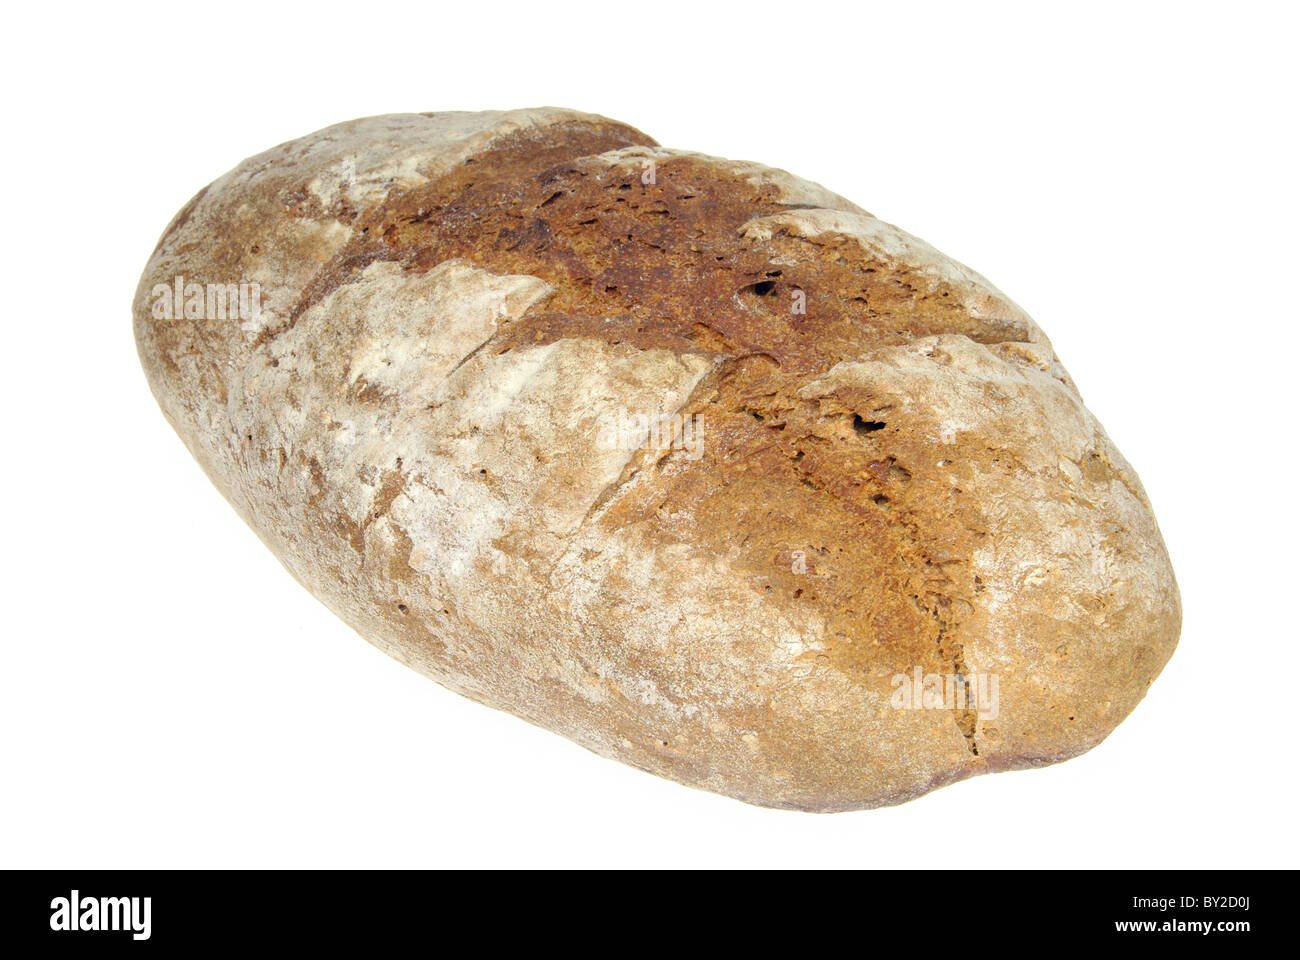 Brot - Brot 03 Stockfoto